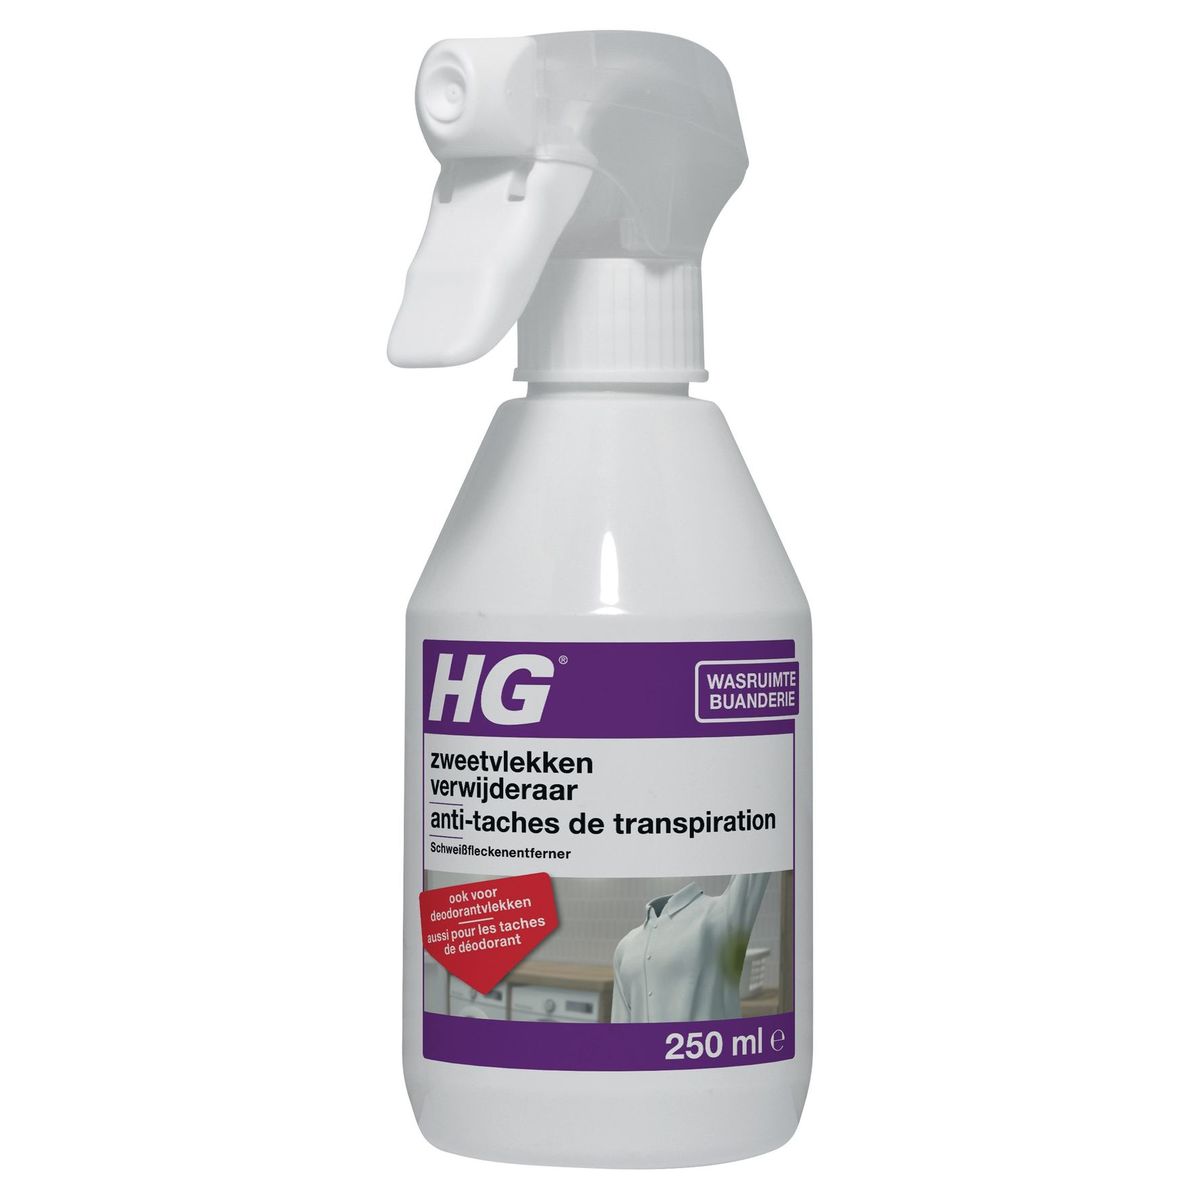 HG Buanderie Anti-Taches de Transpiration 250 ml